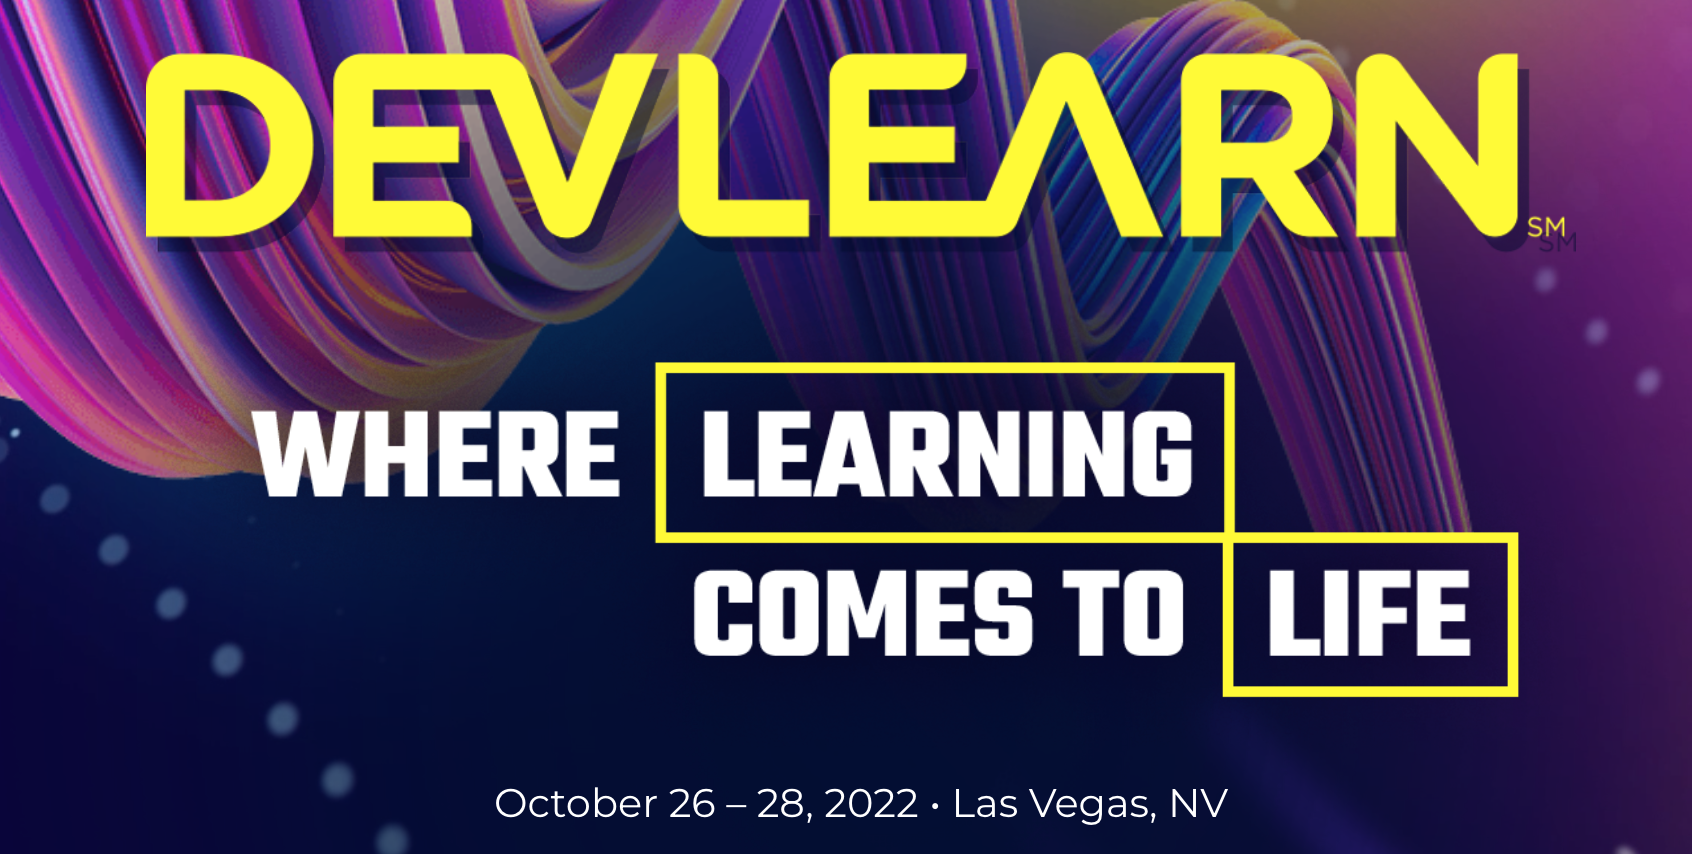 Image sharing information for DevLearn 2022. Dates: October 26-28 in Las Vegas. 